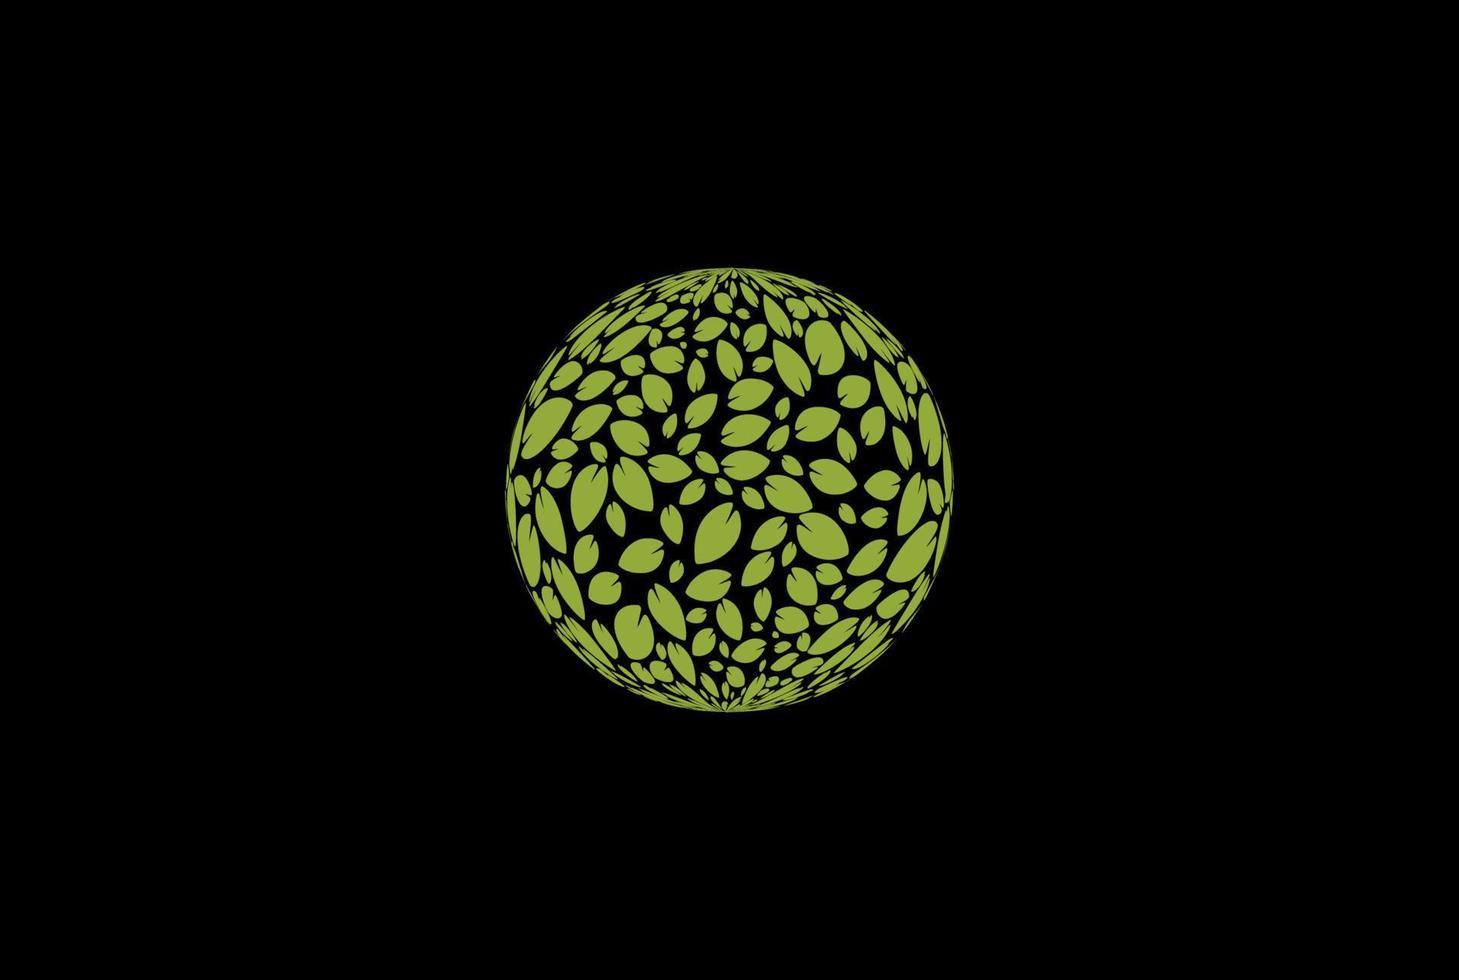 círculo esfera circular folha verde deixa bola de folhagem para vetor de design de logotipo de ambiente global mundial